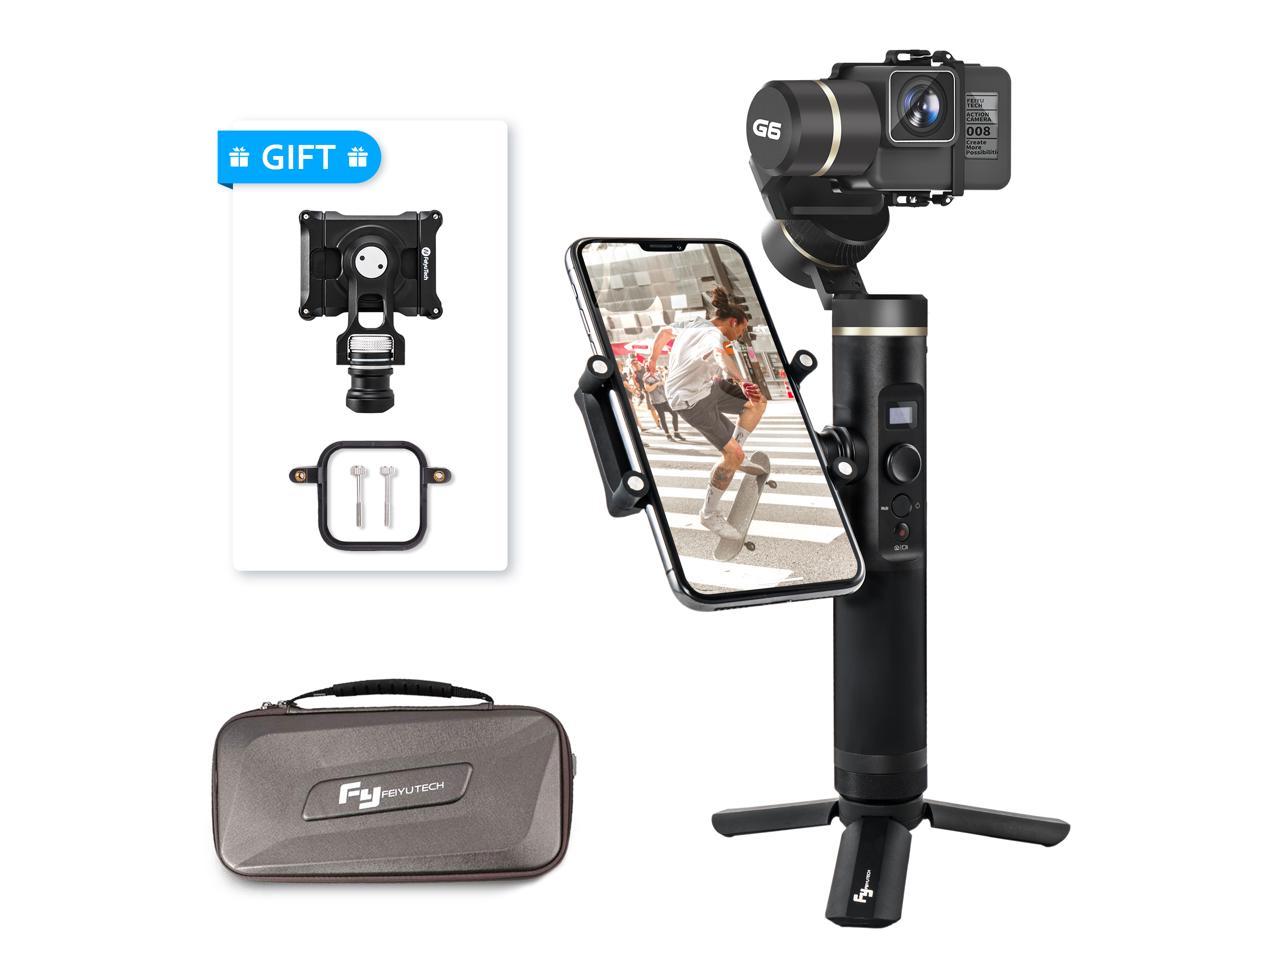 AEE with WiFi Feiyu G6 3-Axis Handheld Gimbal for GoPro Hero 6/5 4/3+ 3 Yi cam 4K Blue Tooth OLED Screen 